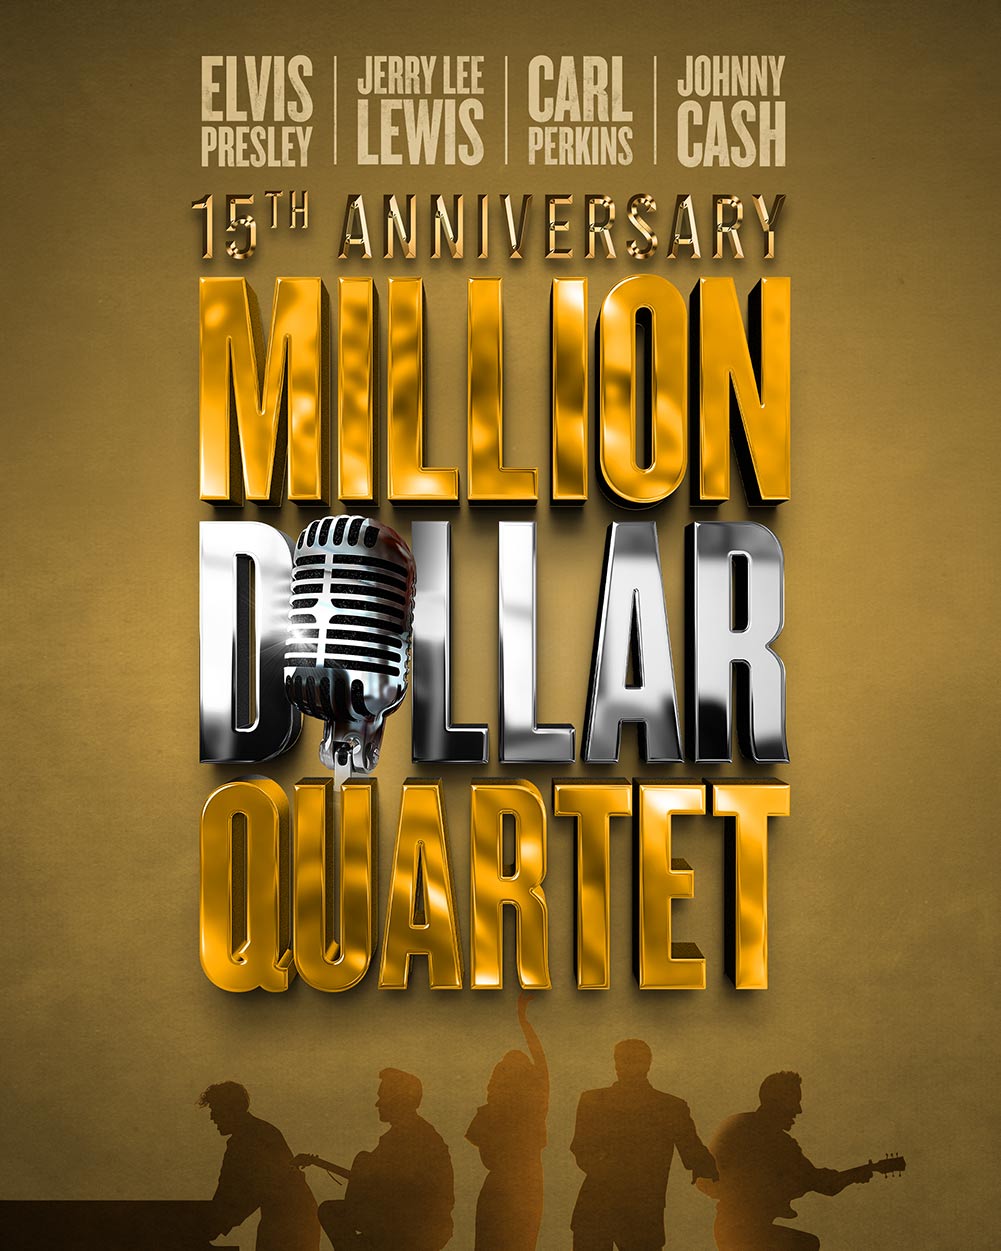 Million Dollar Quartet 15th Anniversary Tour show artwork